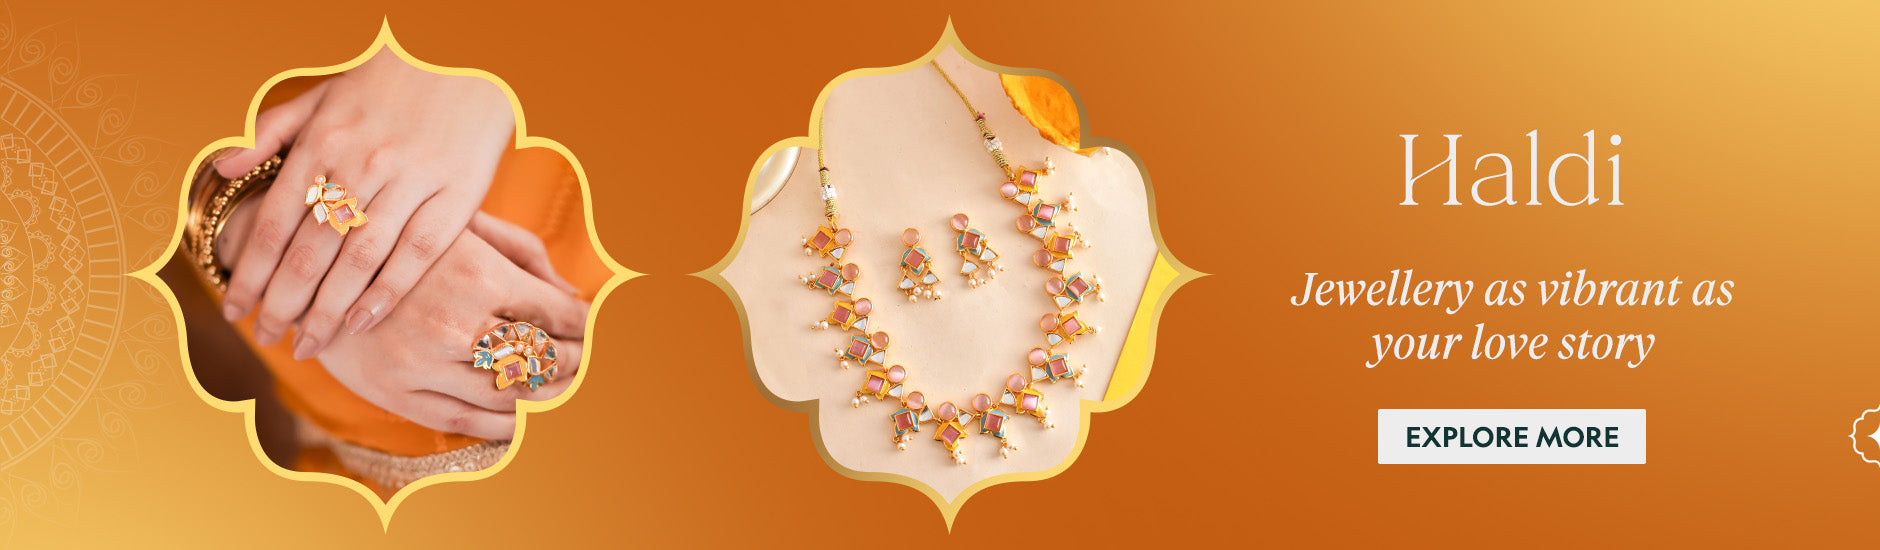 voylla.com - Jewellery collection for the Haldi ceremony